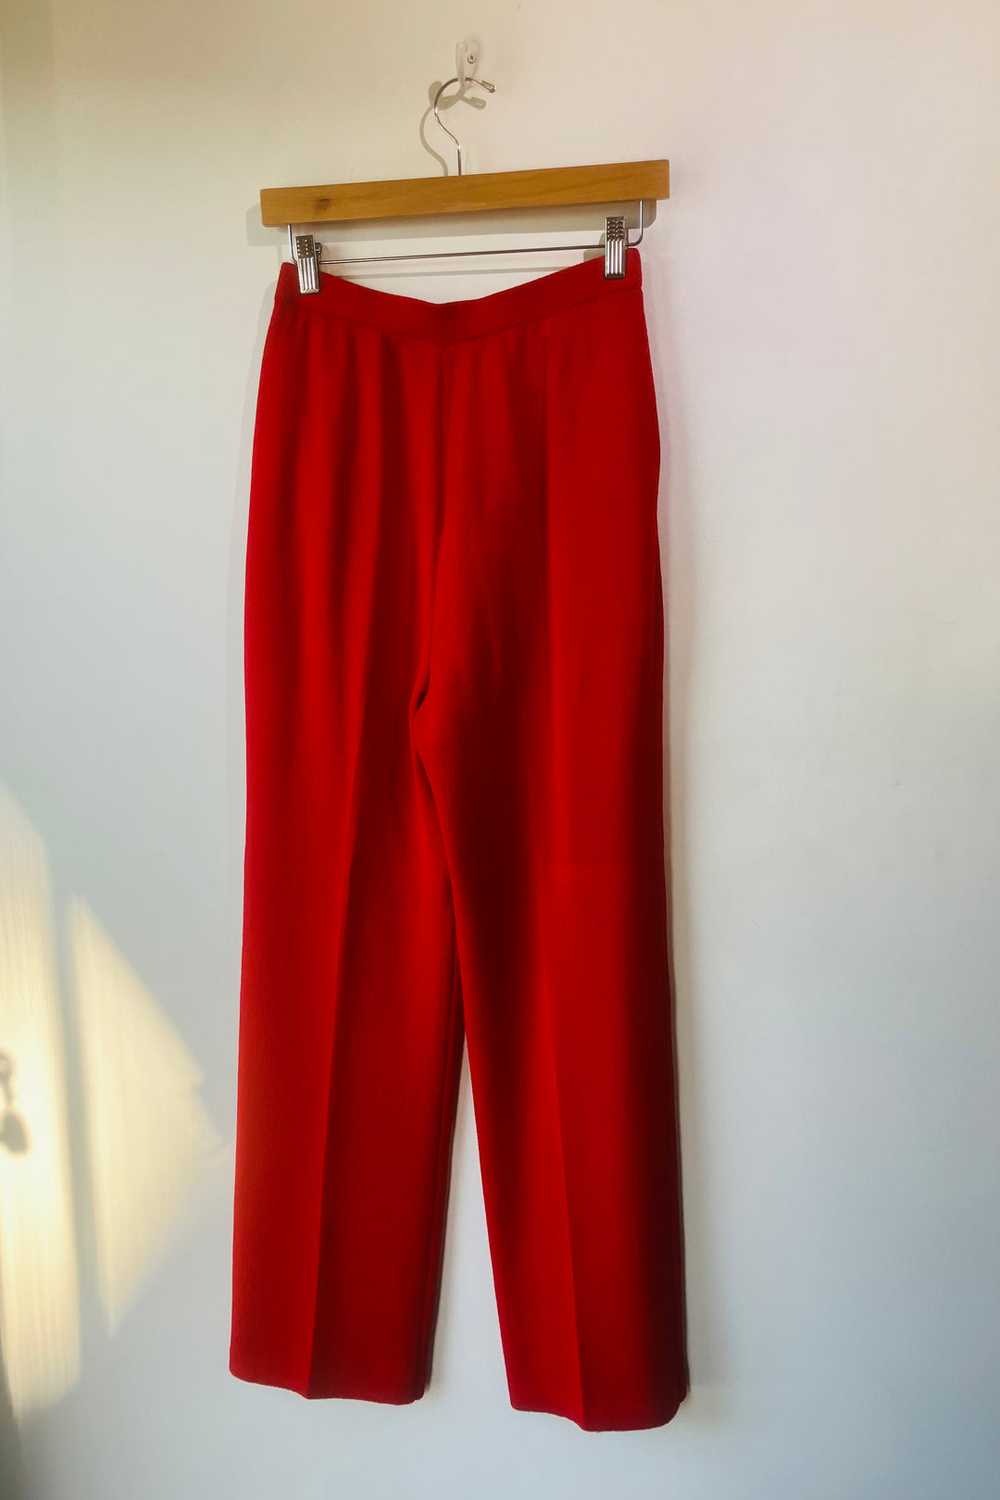 Vintage St. John Red Knit Pants - image 4